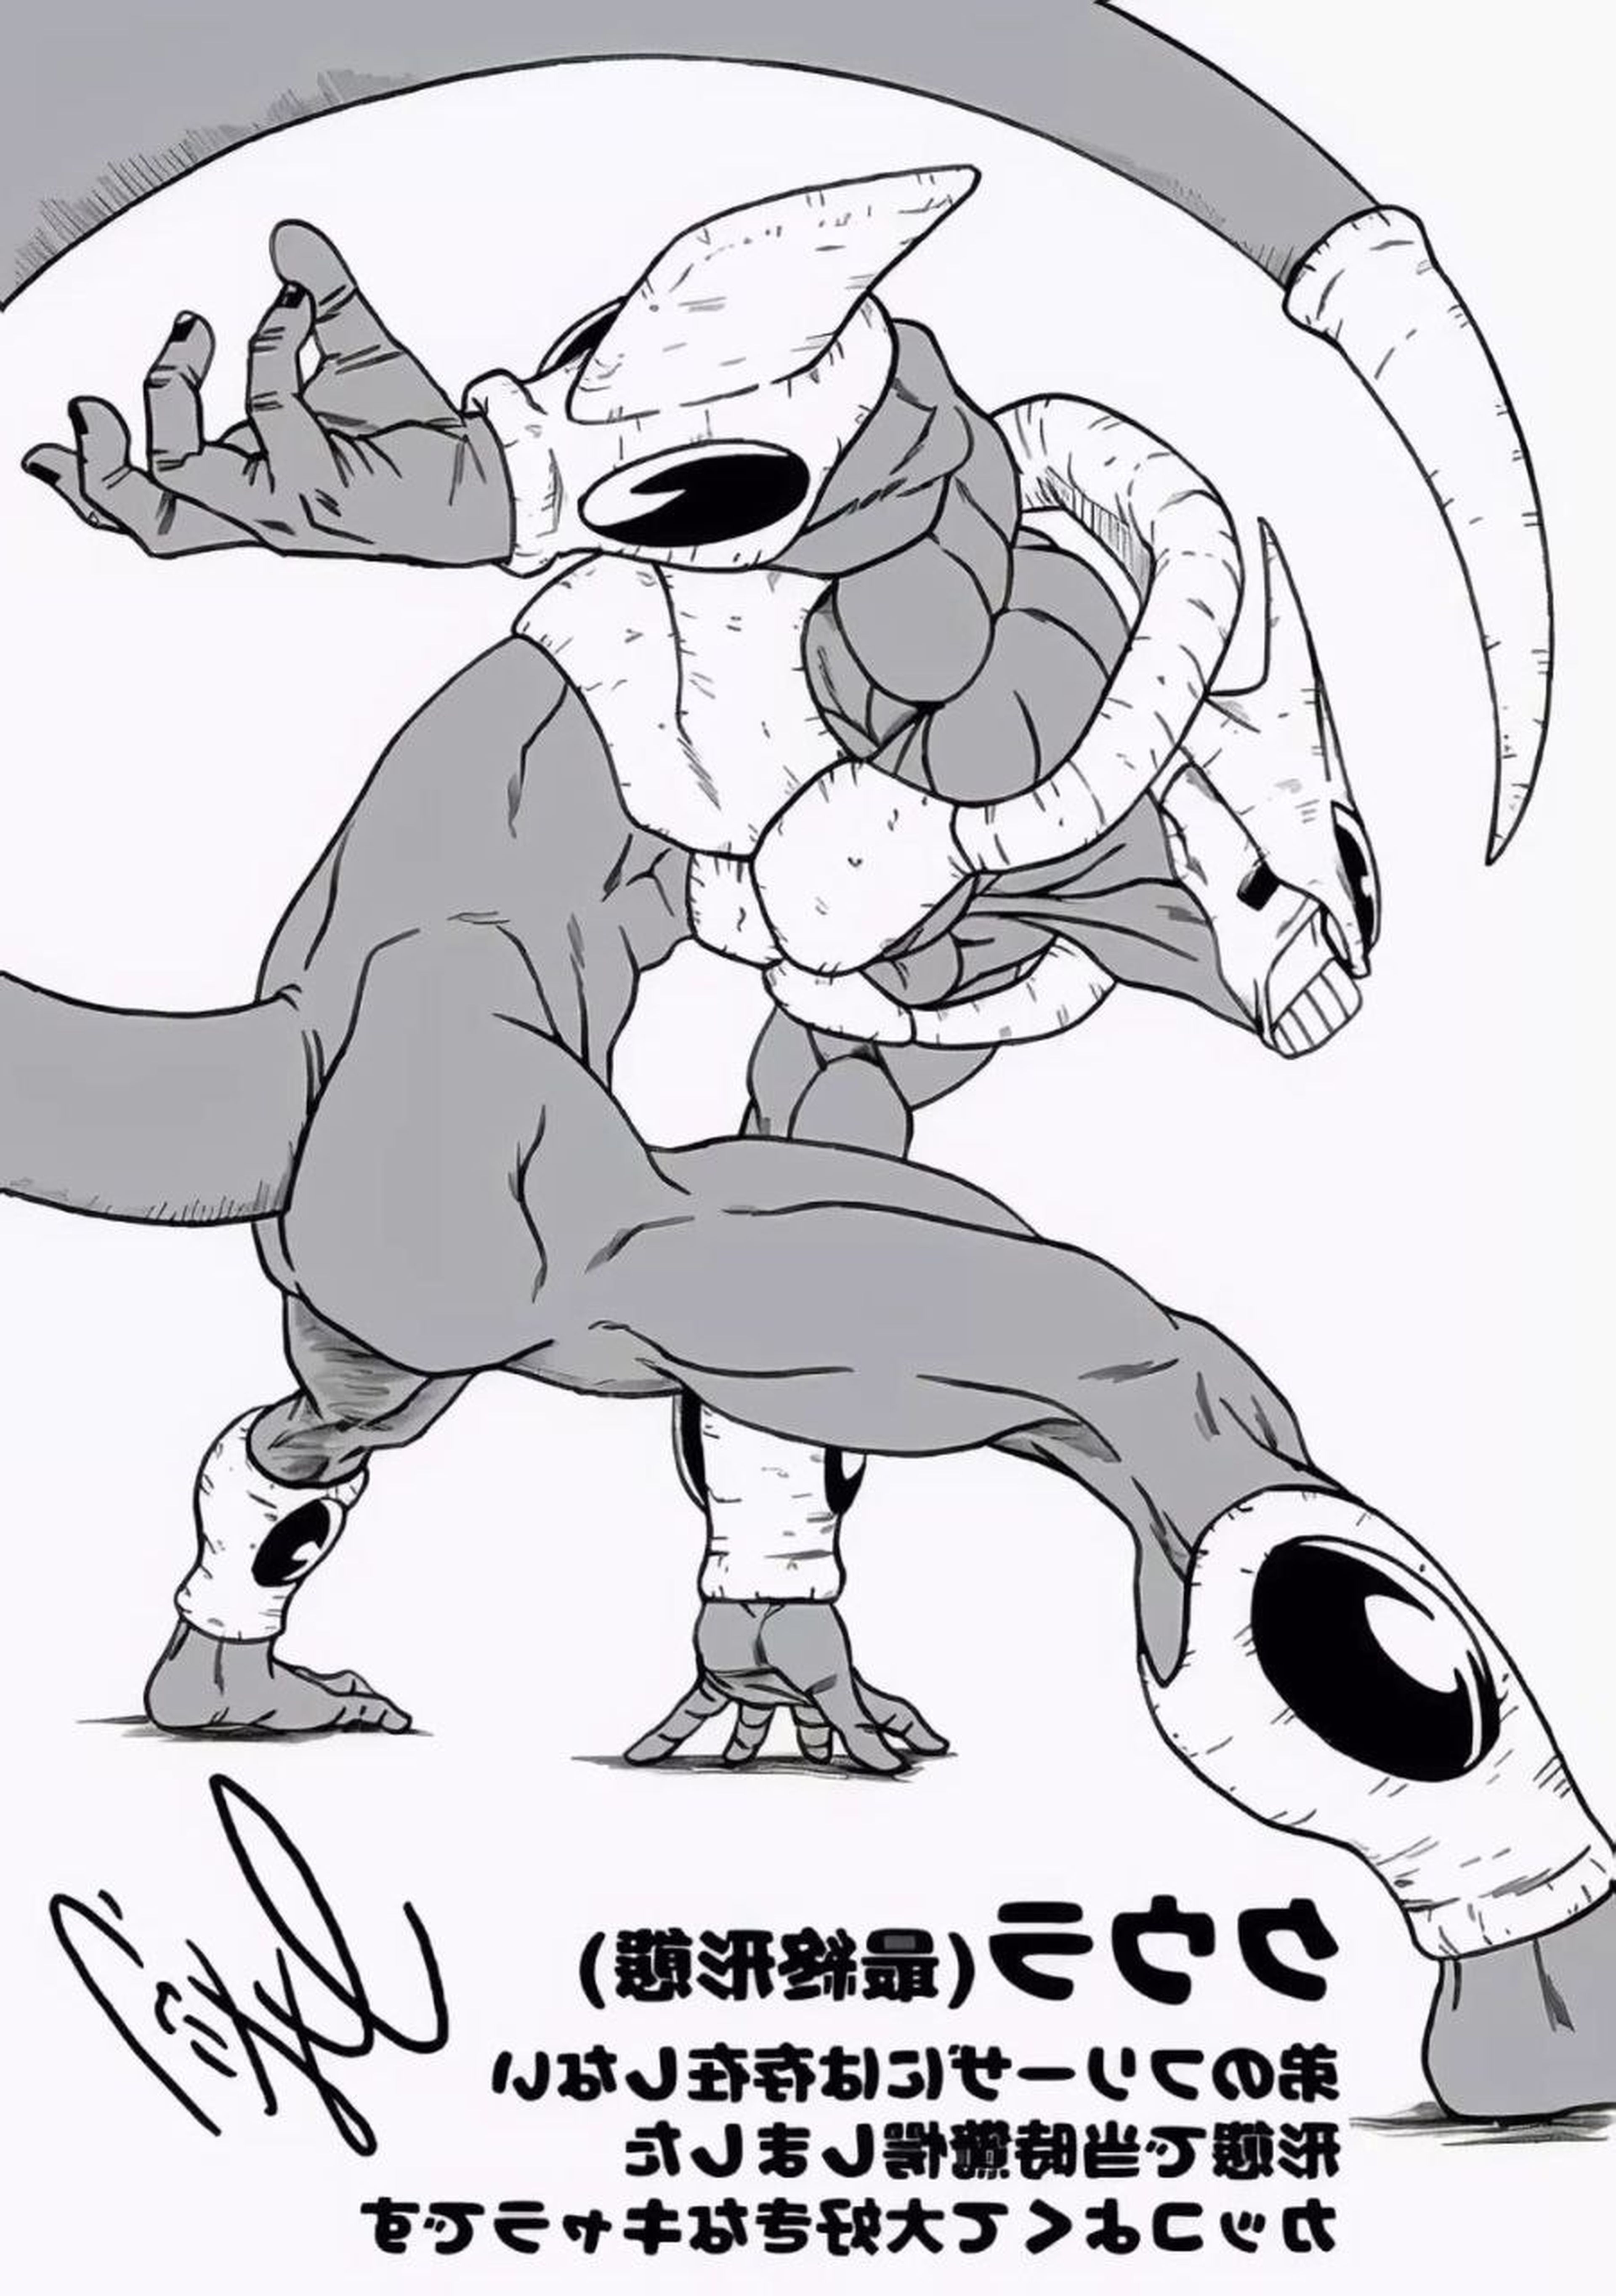 Toyotaro recicla su propio dibujo de Dragon Ball en la brutal portada del nuevo tomo manga de la serie